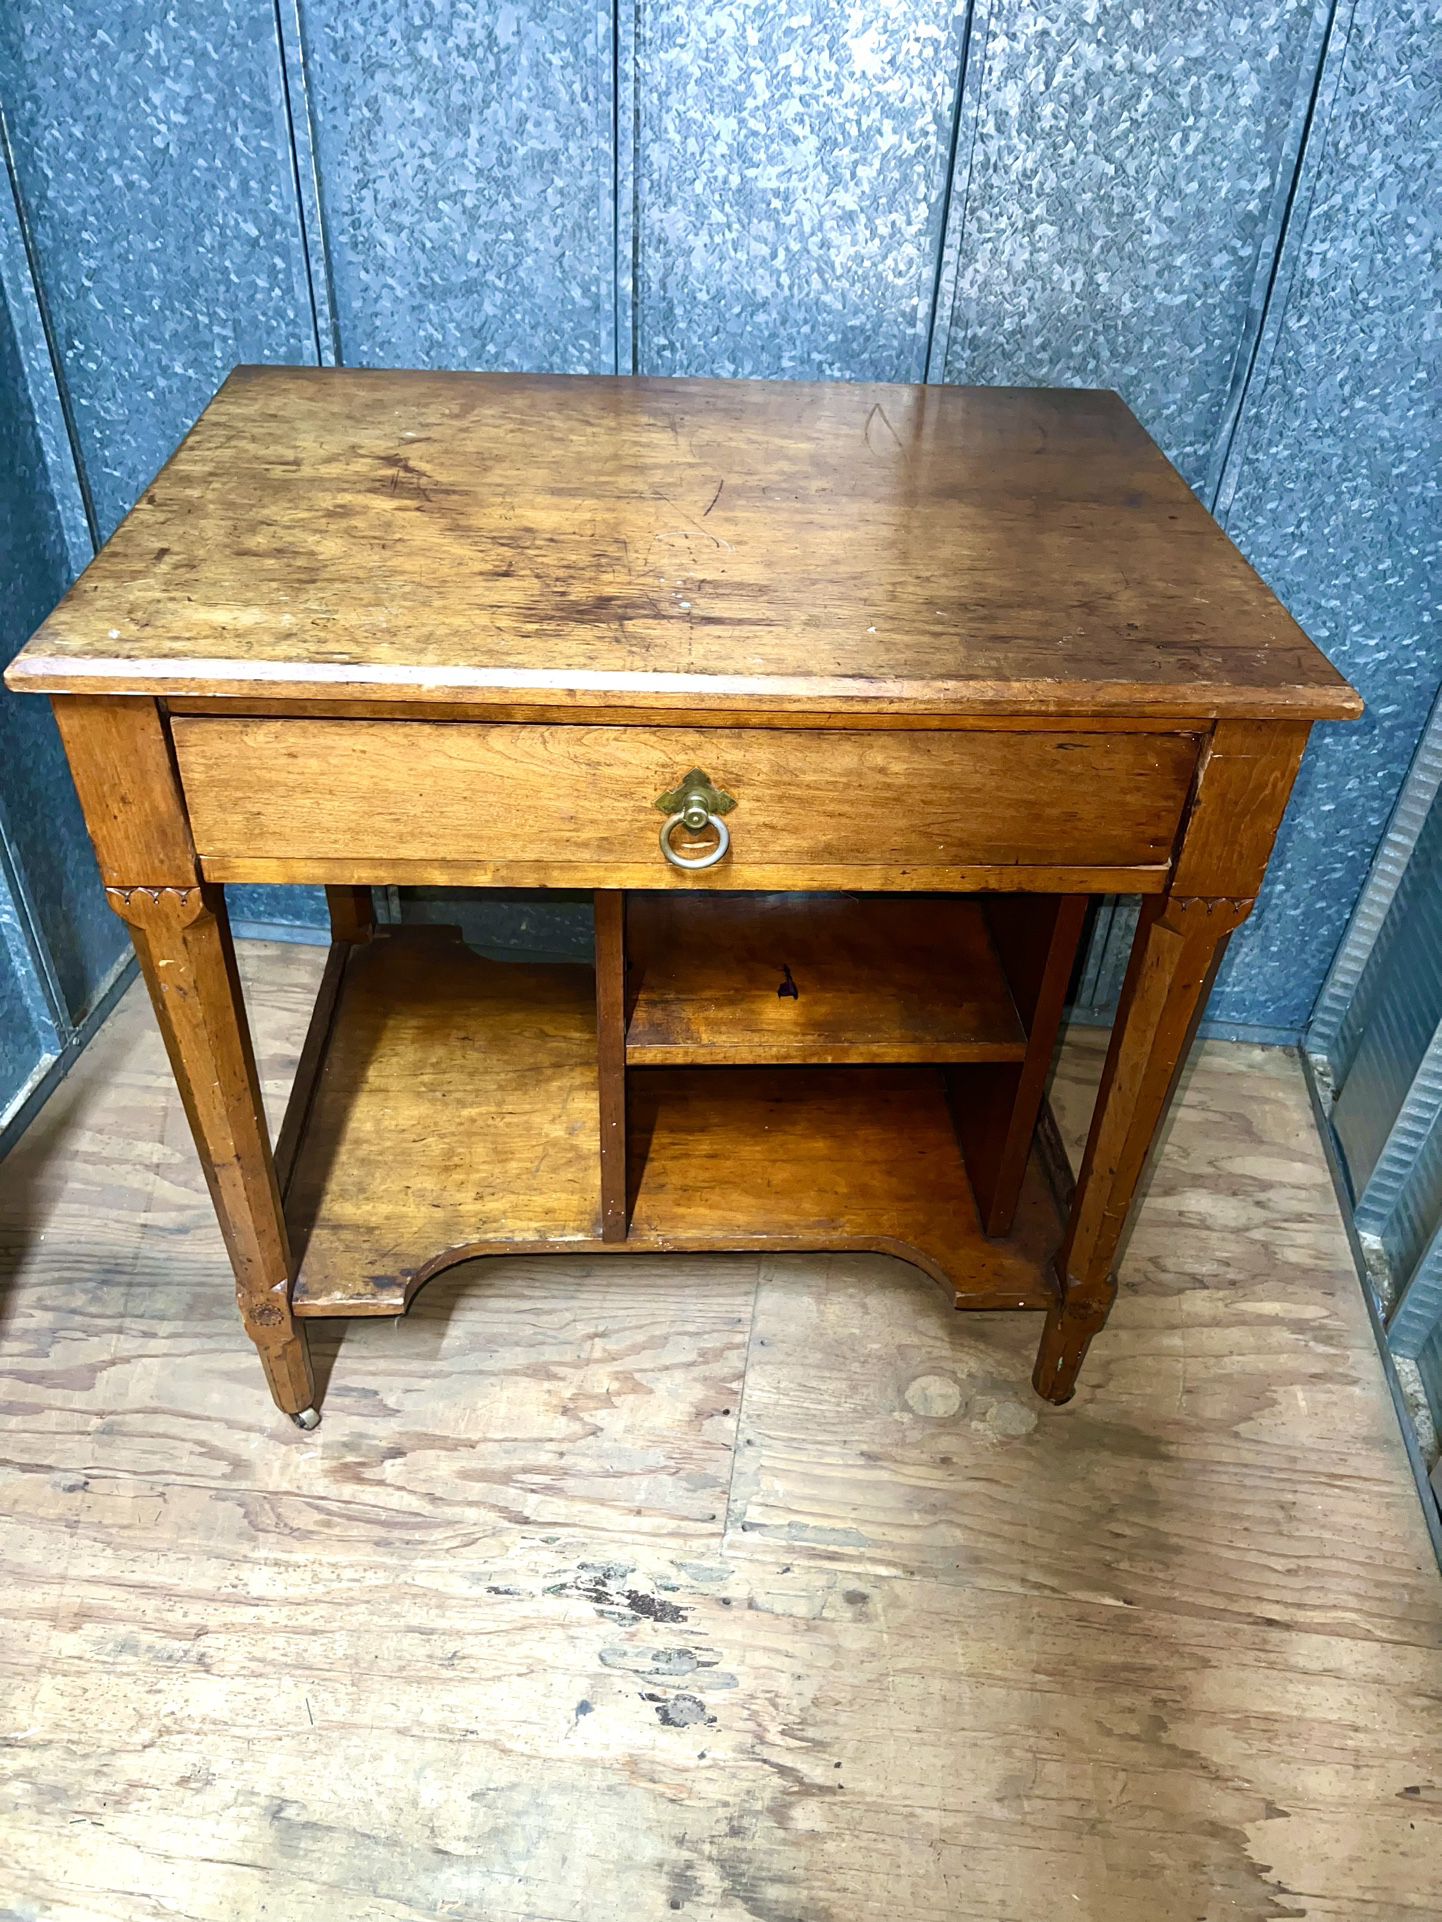 Antique  Vintage Table 1800’s Collectors Item Unique Hepplewhite  Furniture from 28th Century Victorian Era